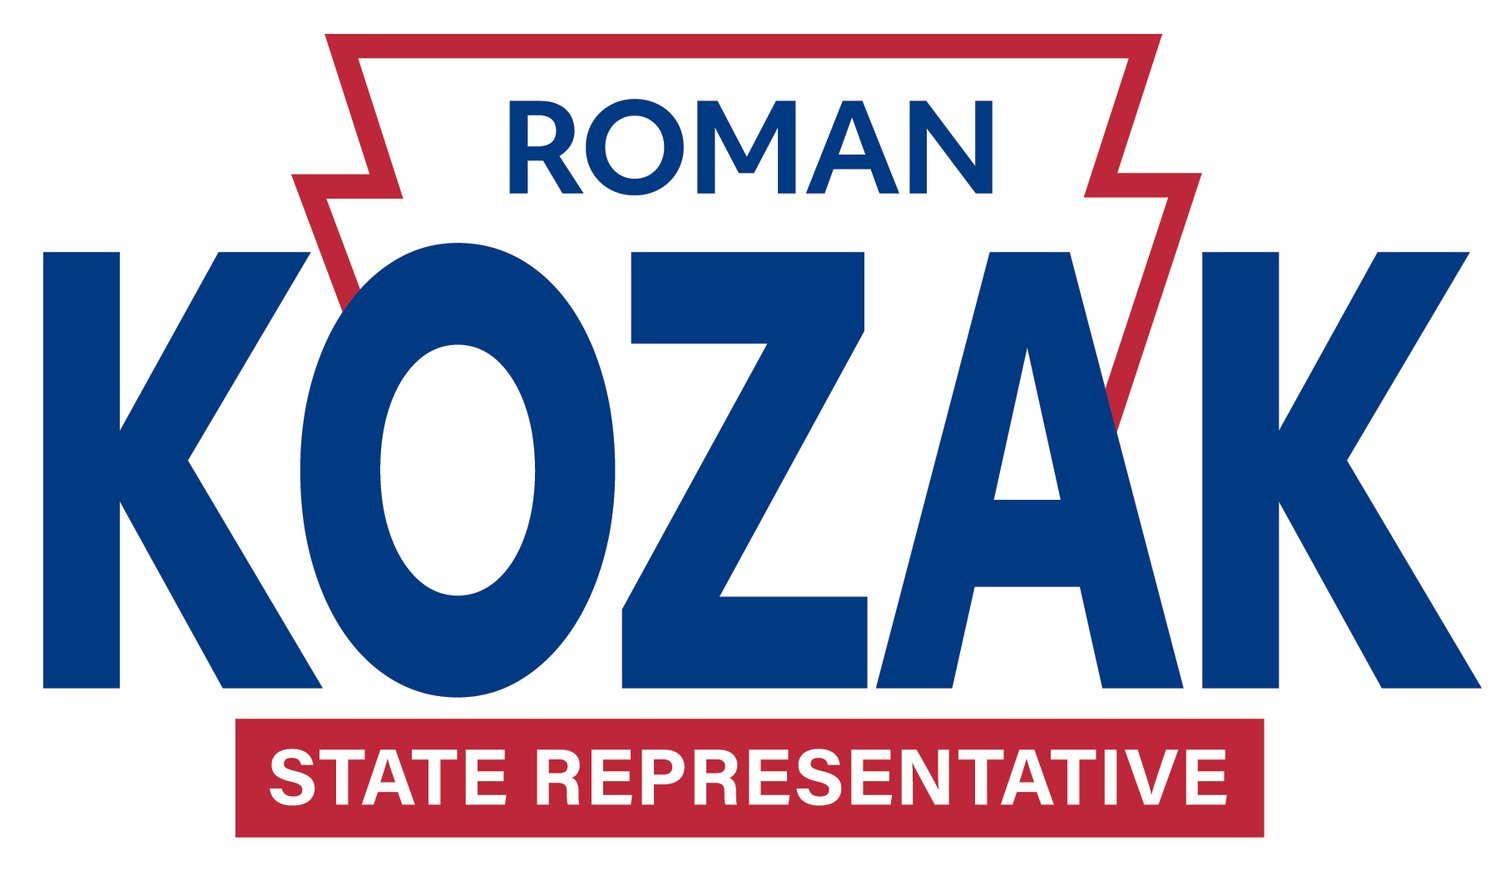 Roman Kozak for State Representative